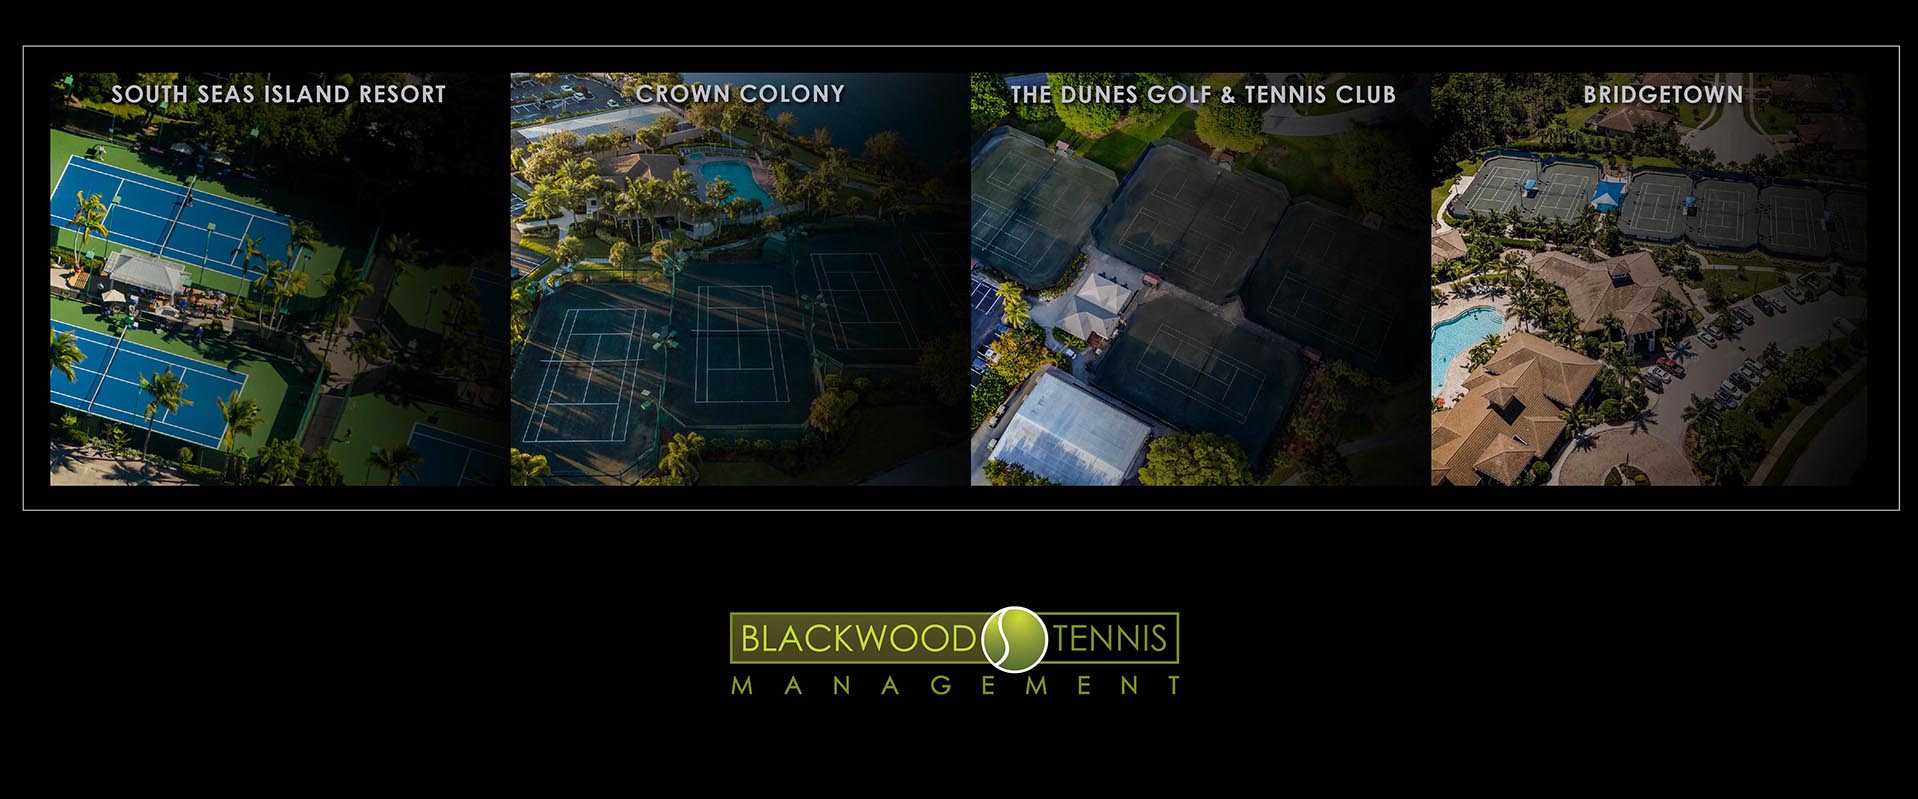 BlackWood Tennis Management Facilities